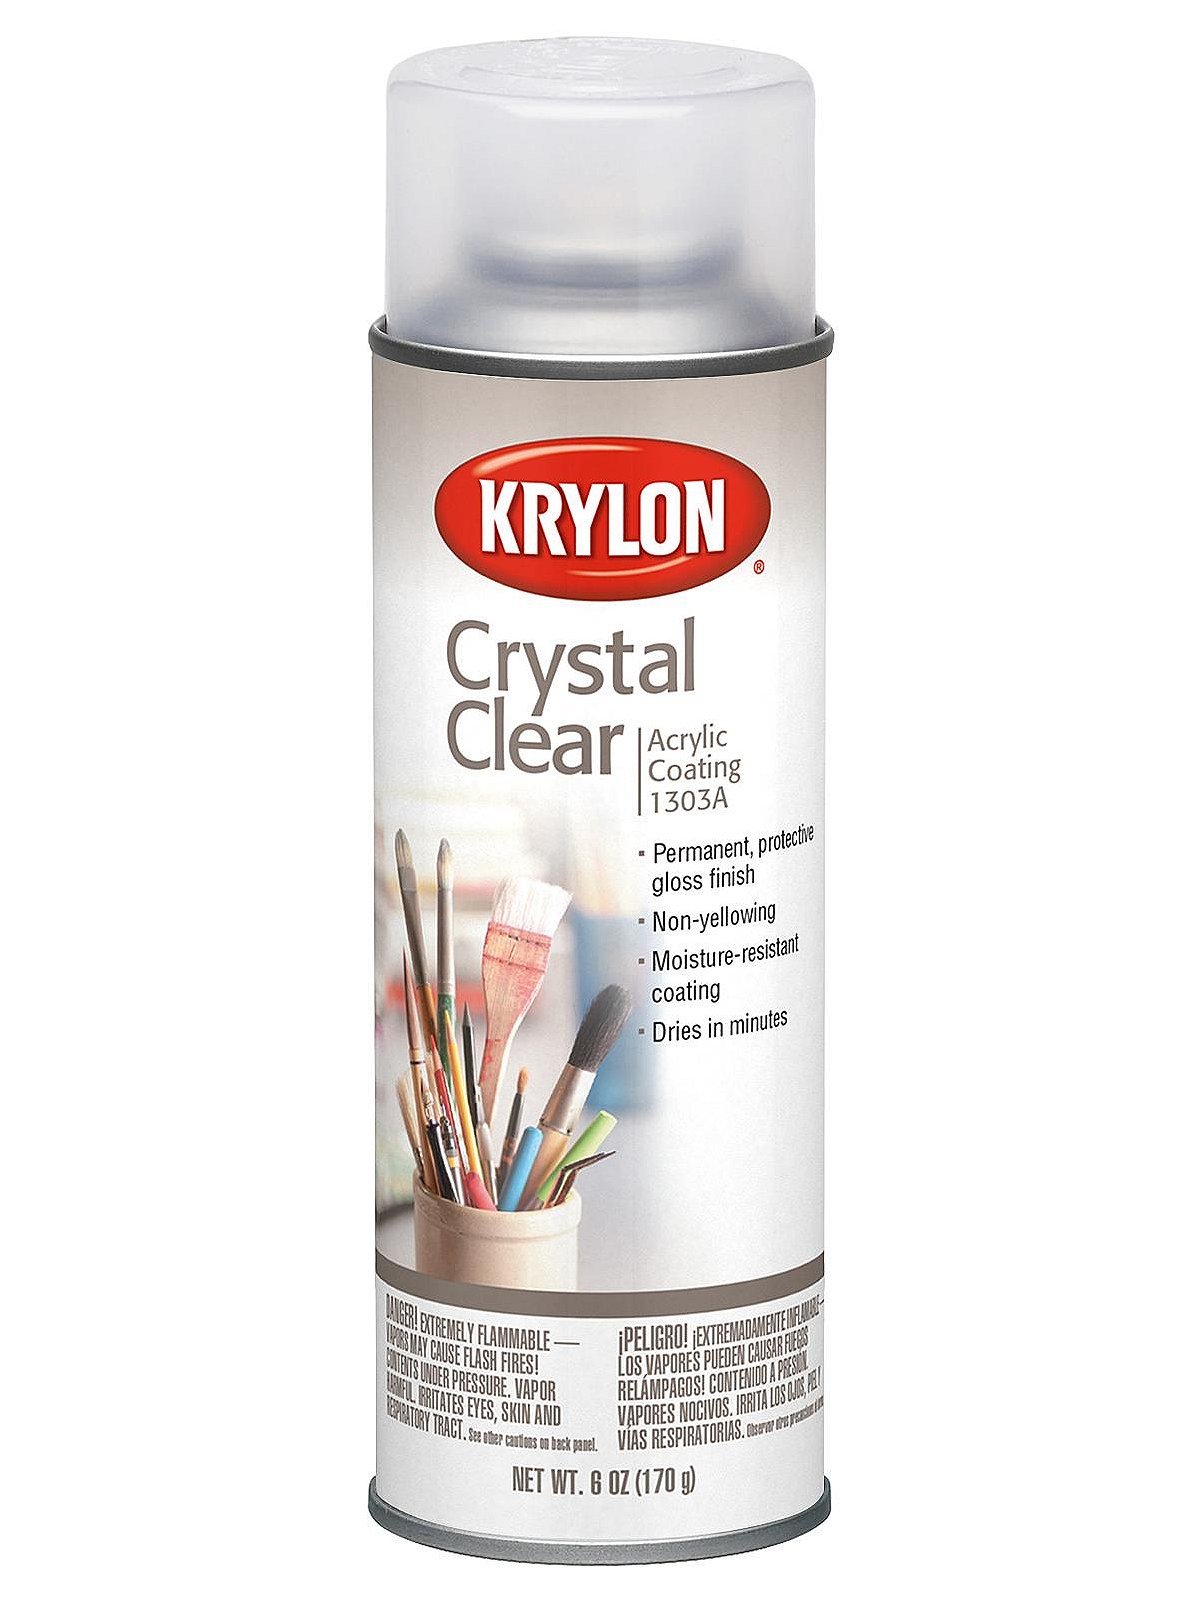 Krylon Crystal Clear Coating - FLAX art & design